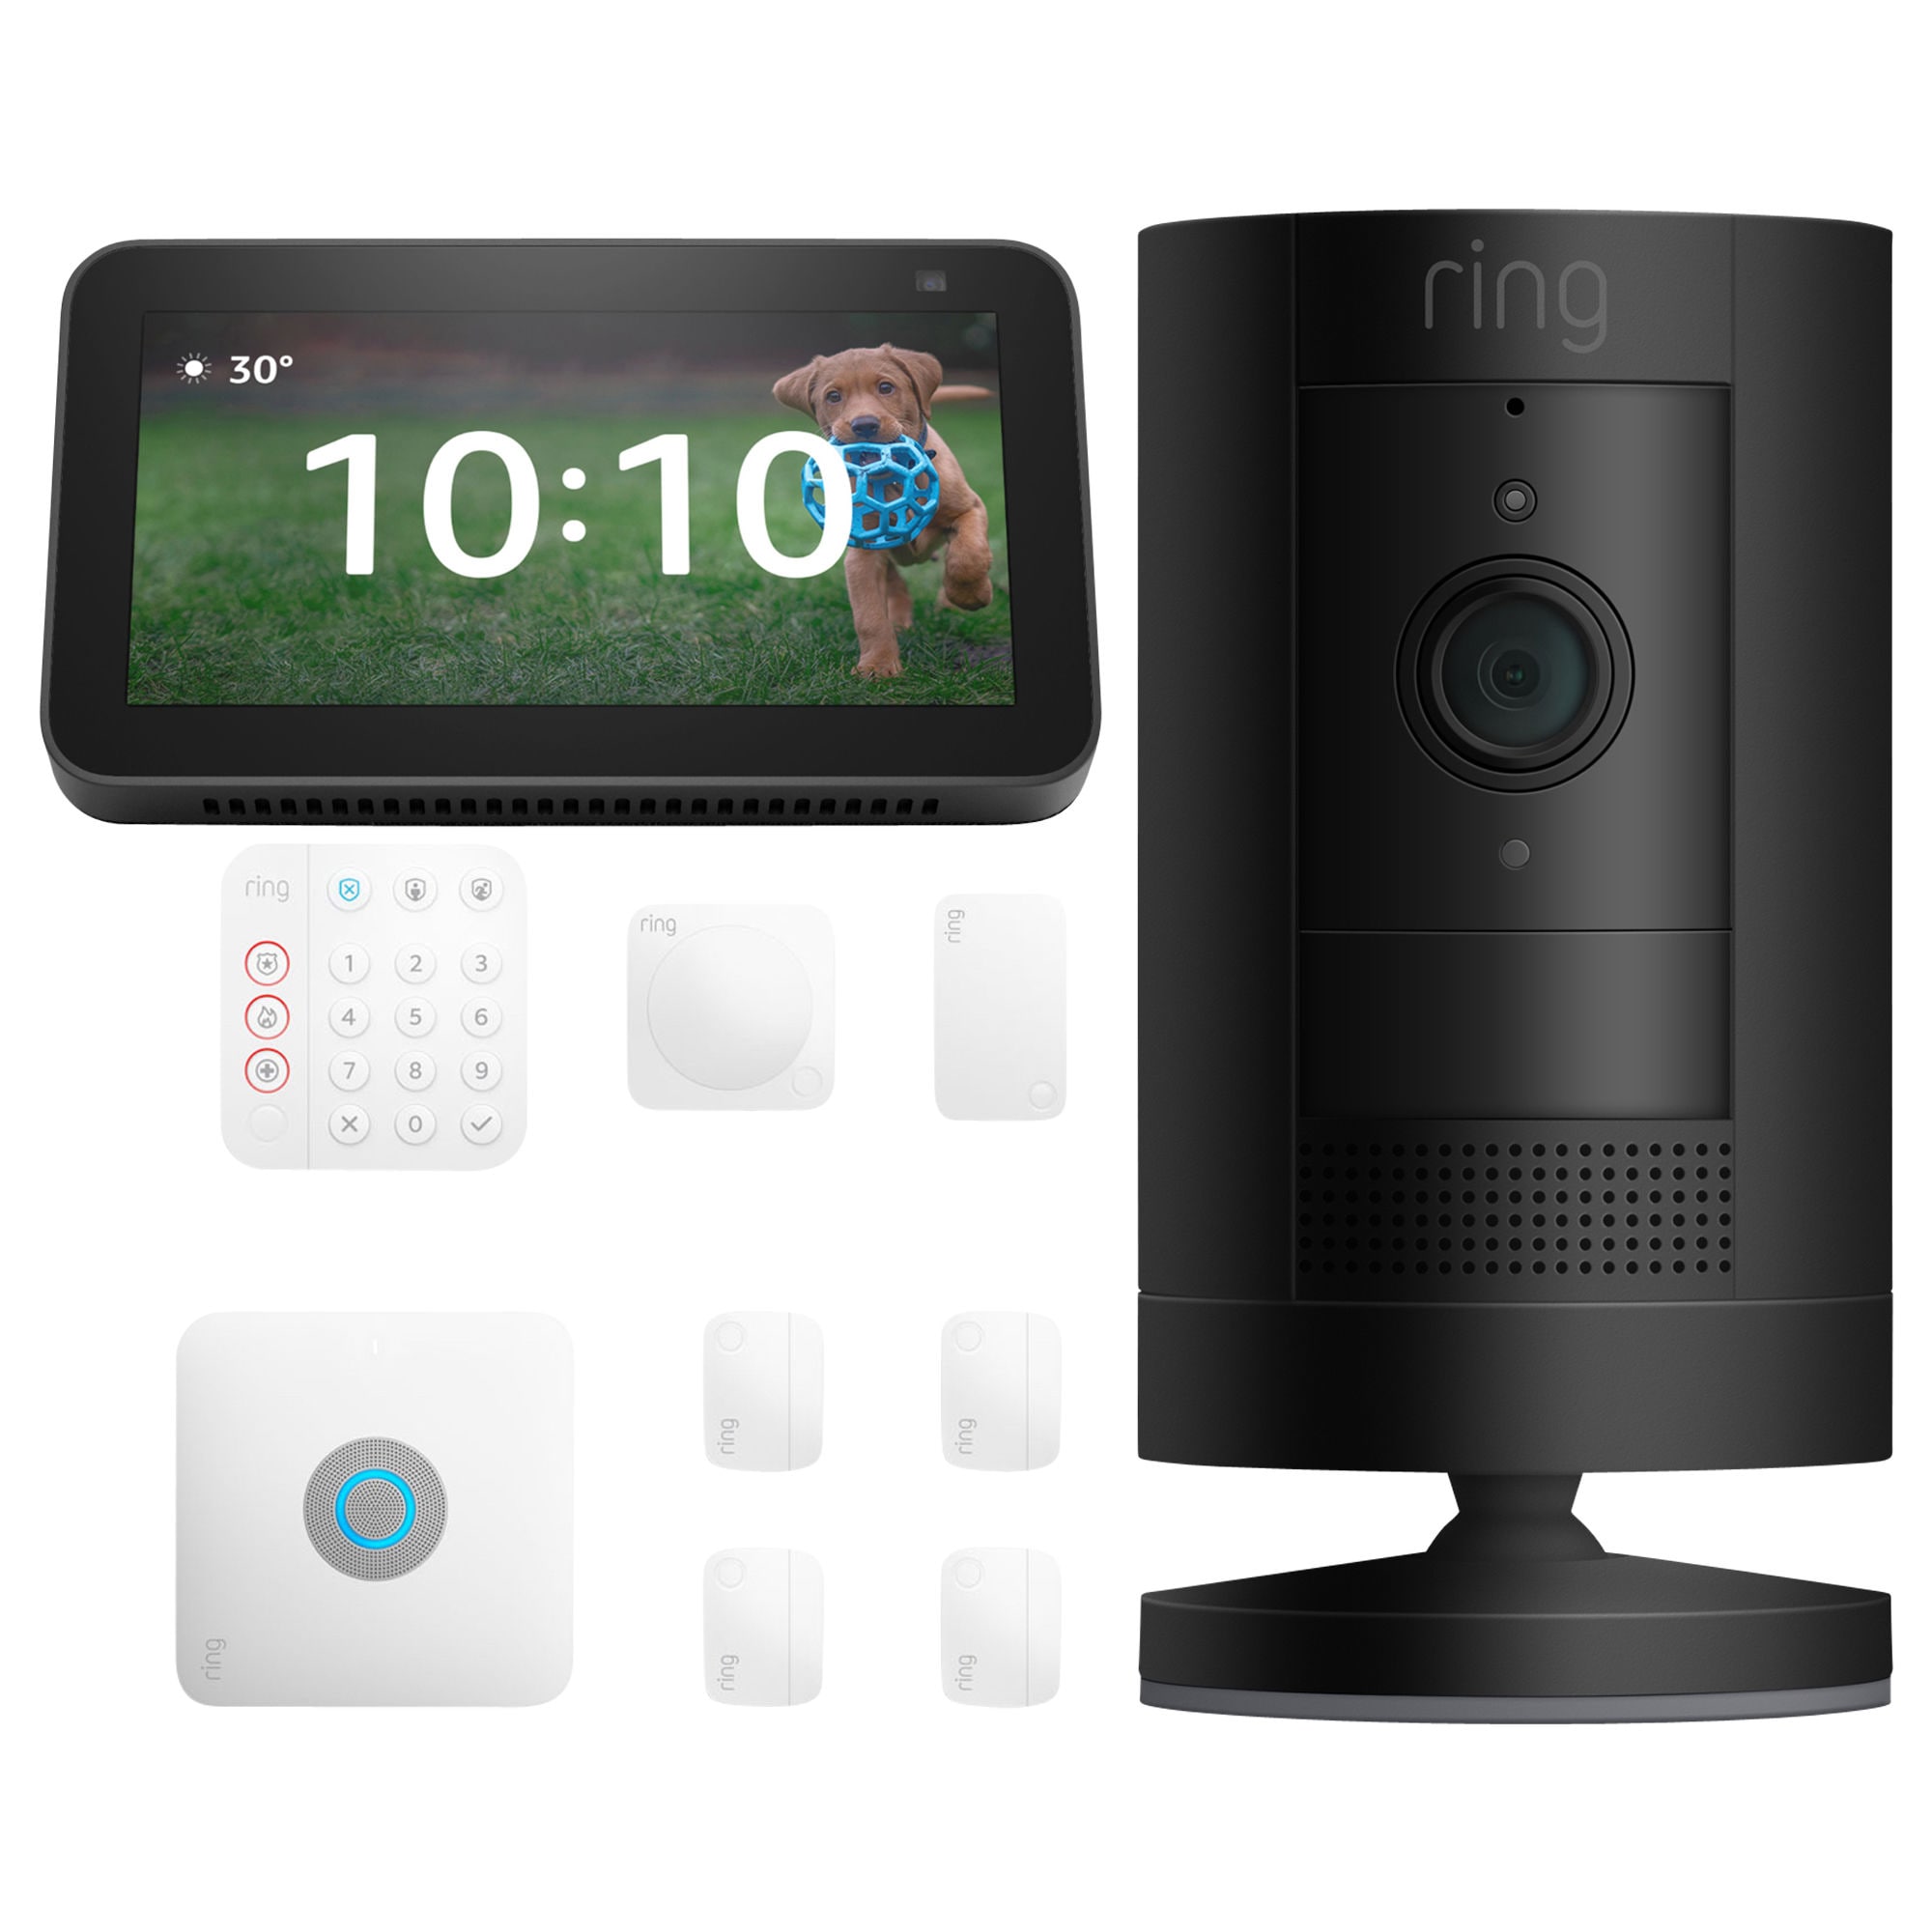 Ring Alarm Pro 8-pc + Ring Stick Up Camera Battery - Black + Amazon Echo Show 5 - Black Bundle